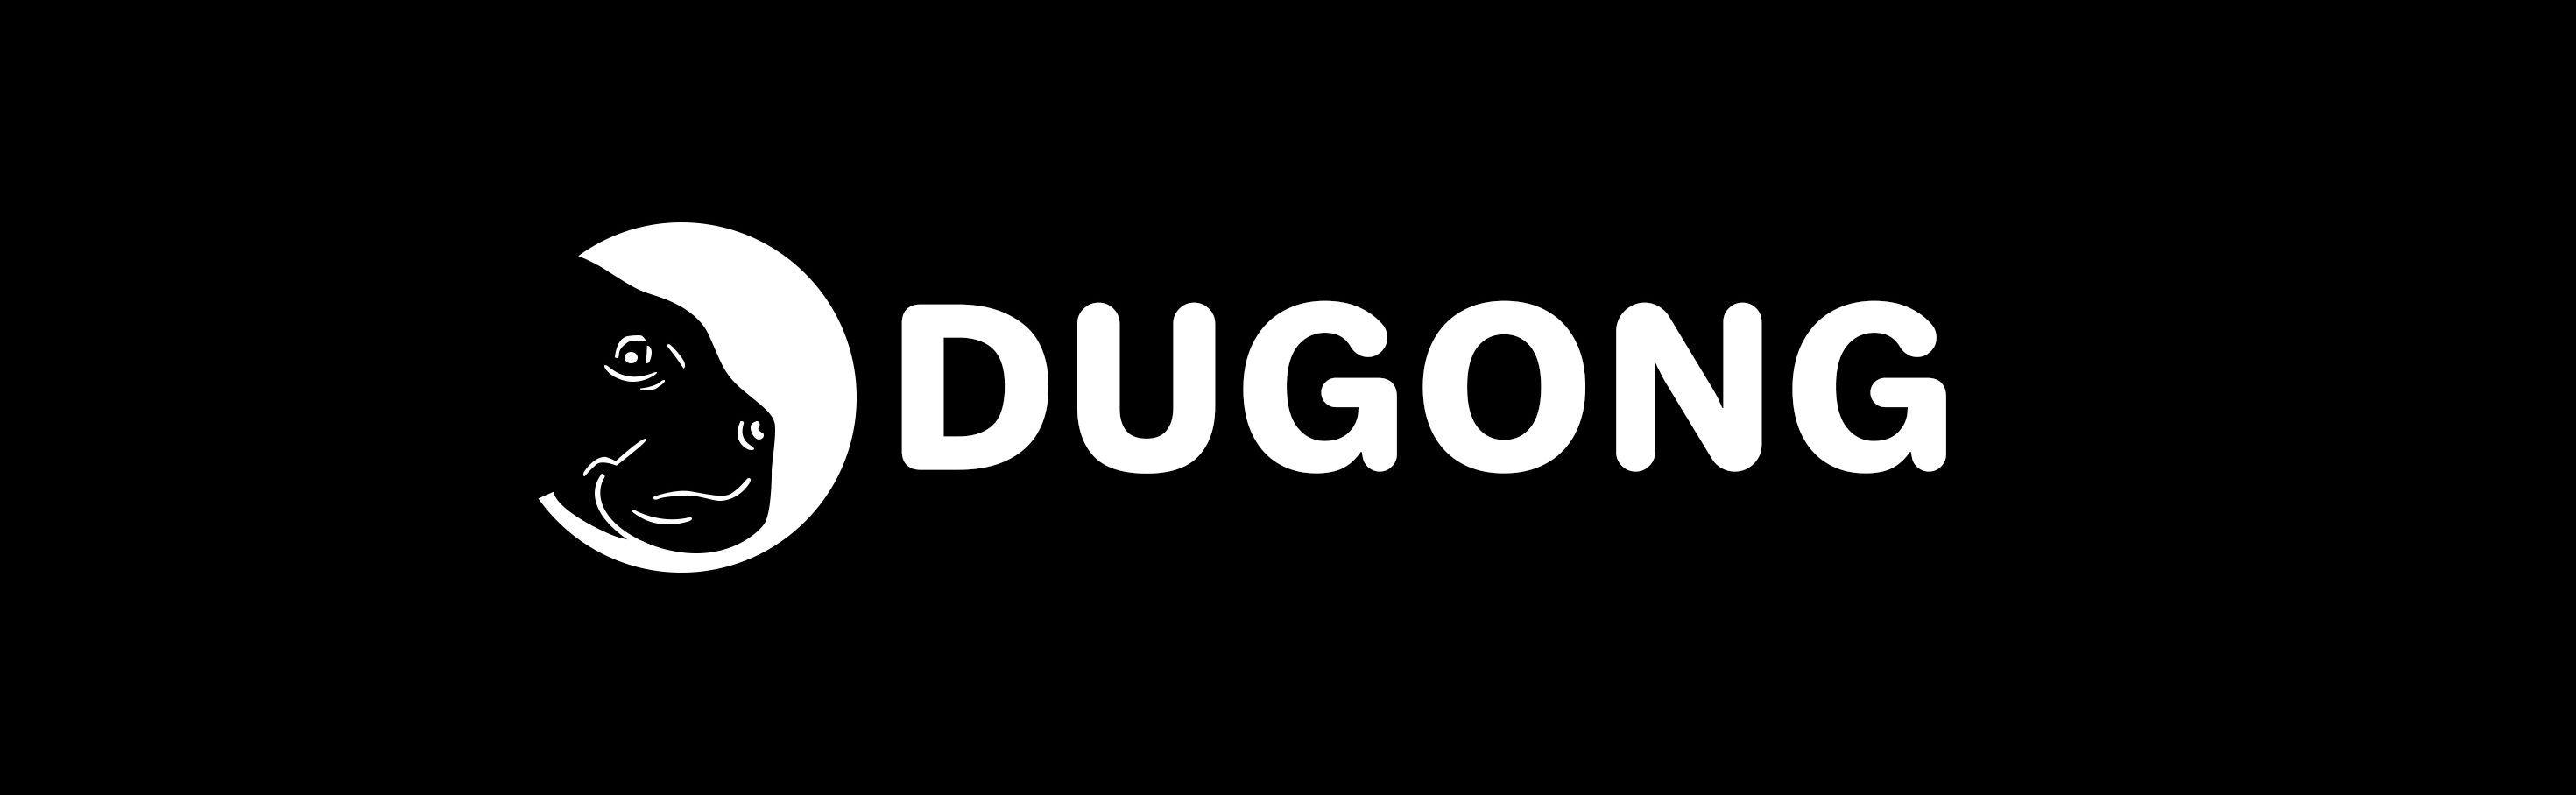 Dugong Logo - Making life simpler